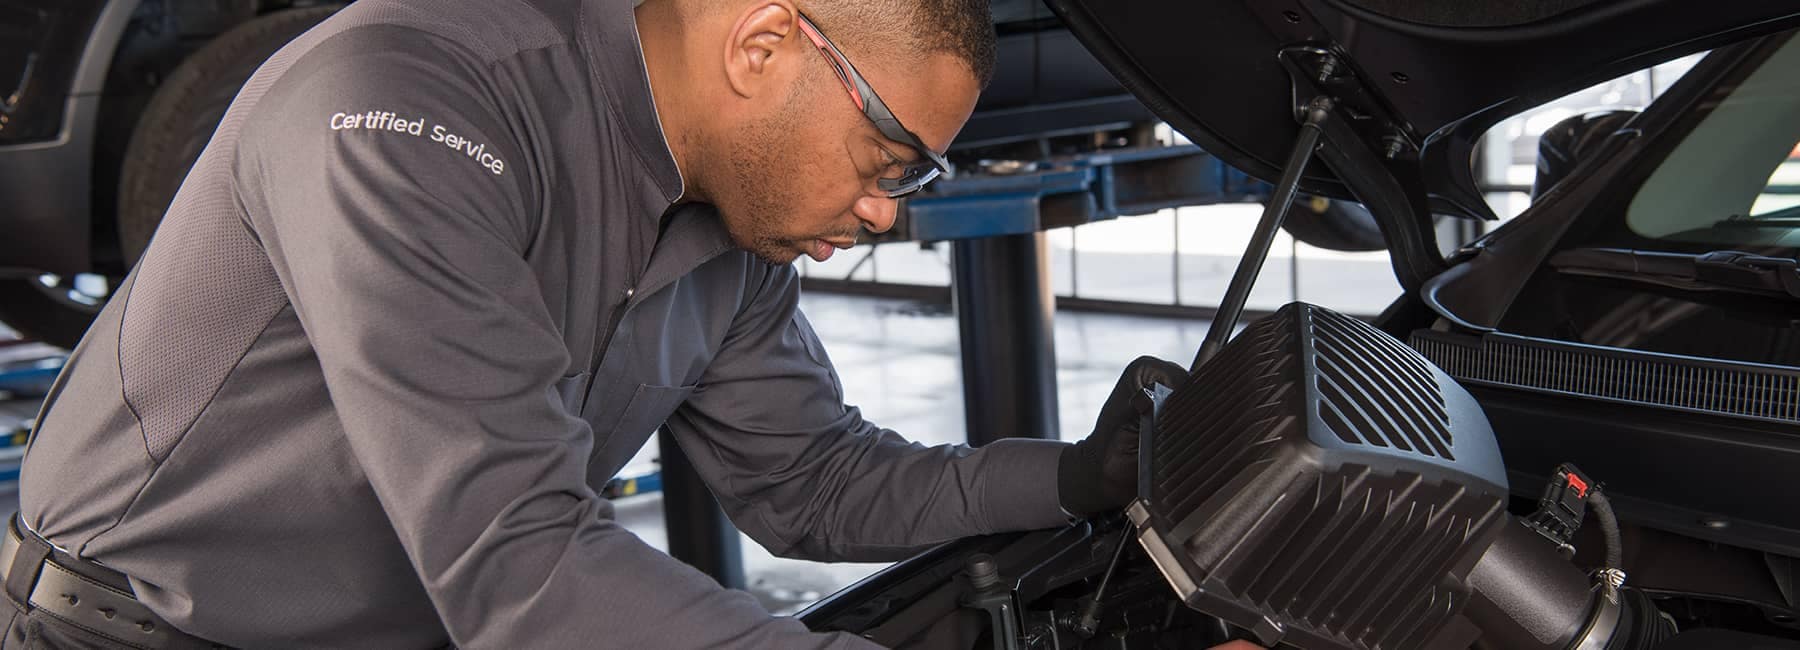 GM certified technician working on car engine